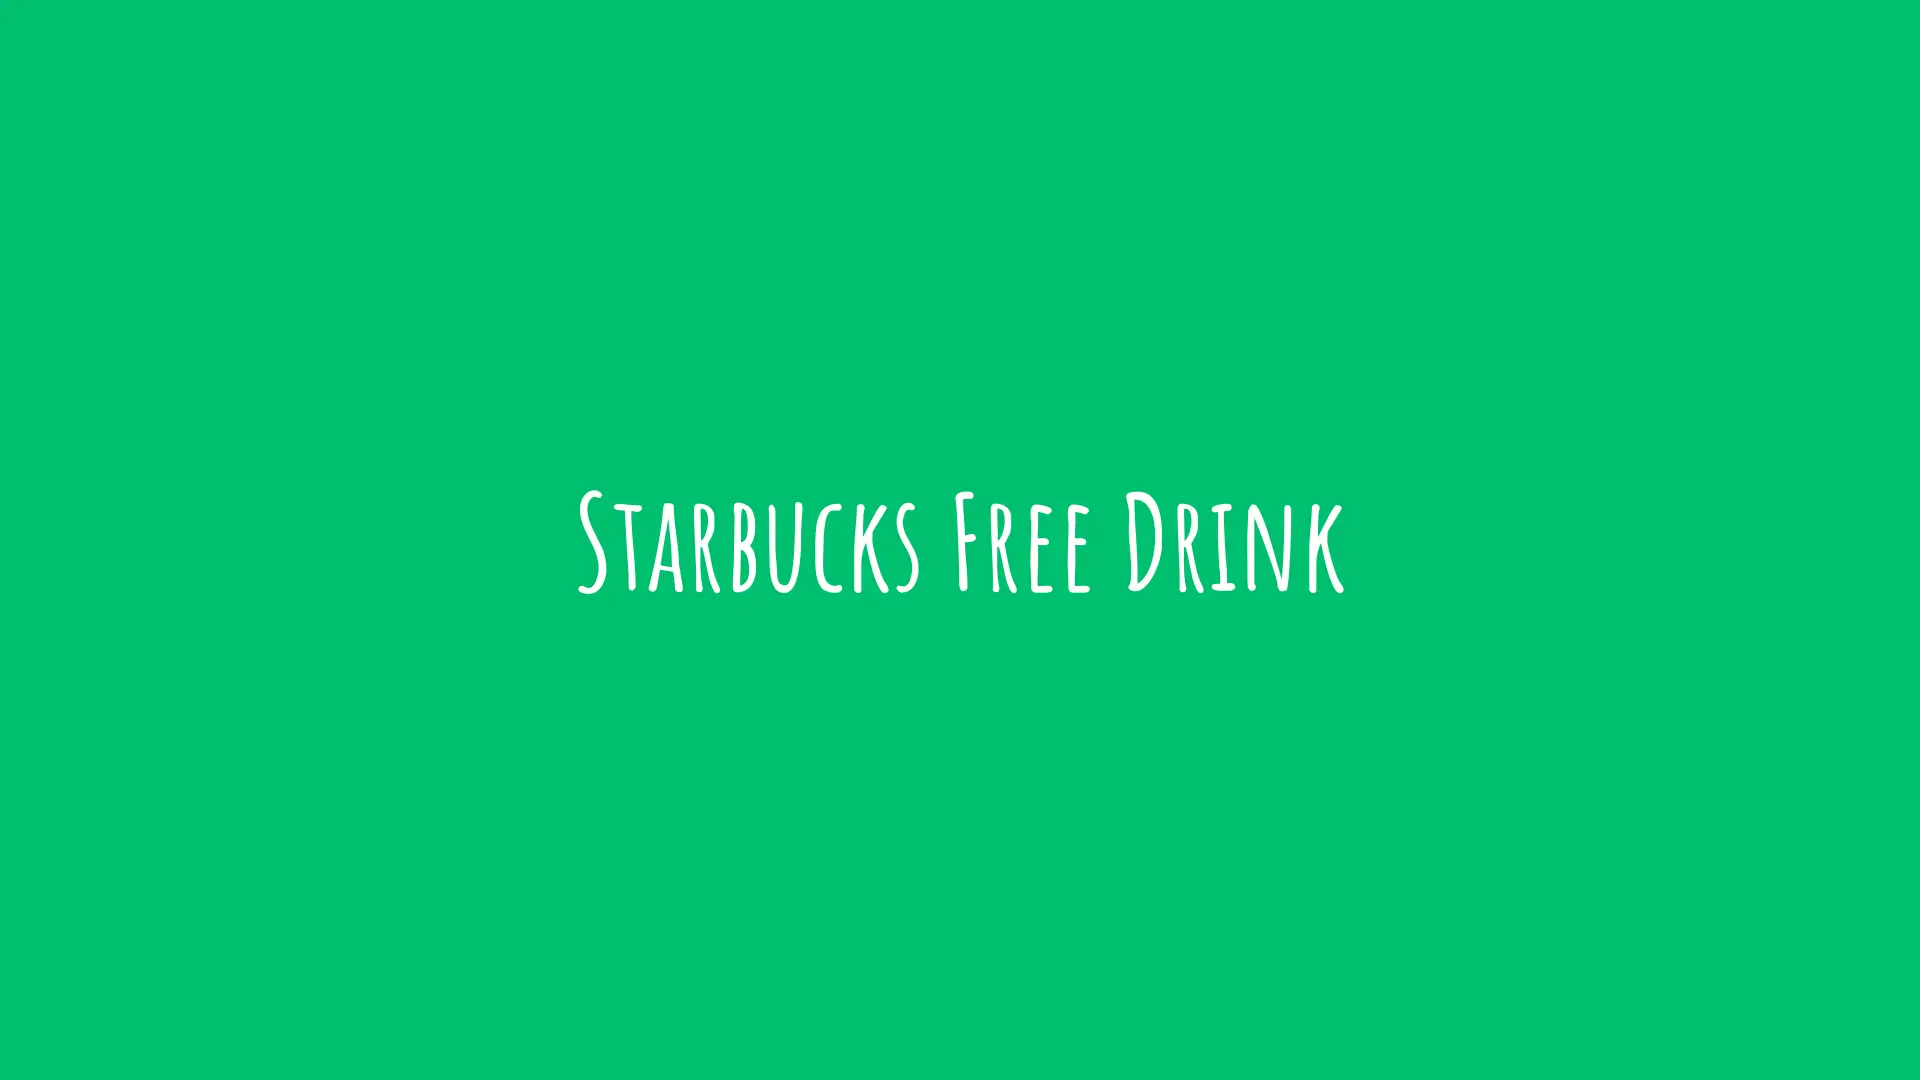 Starbucks Free Drink